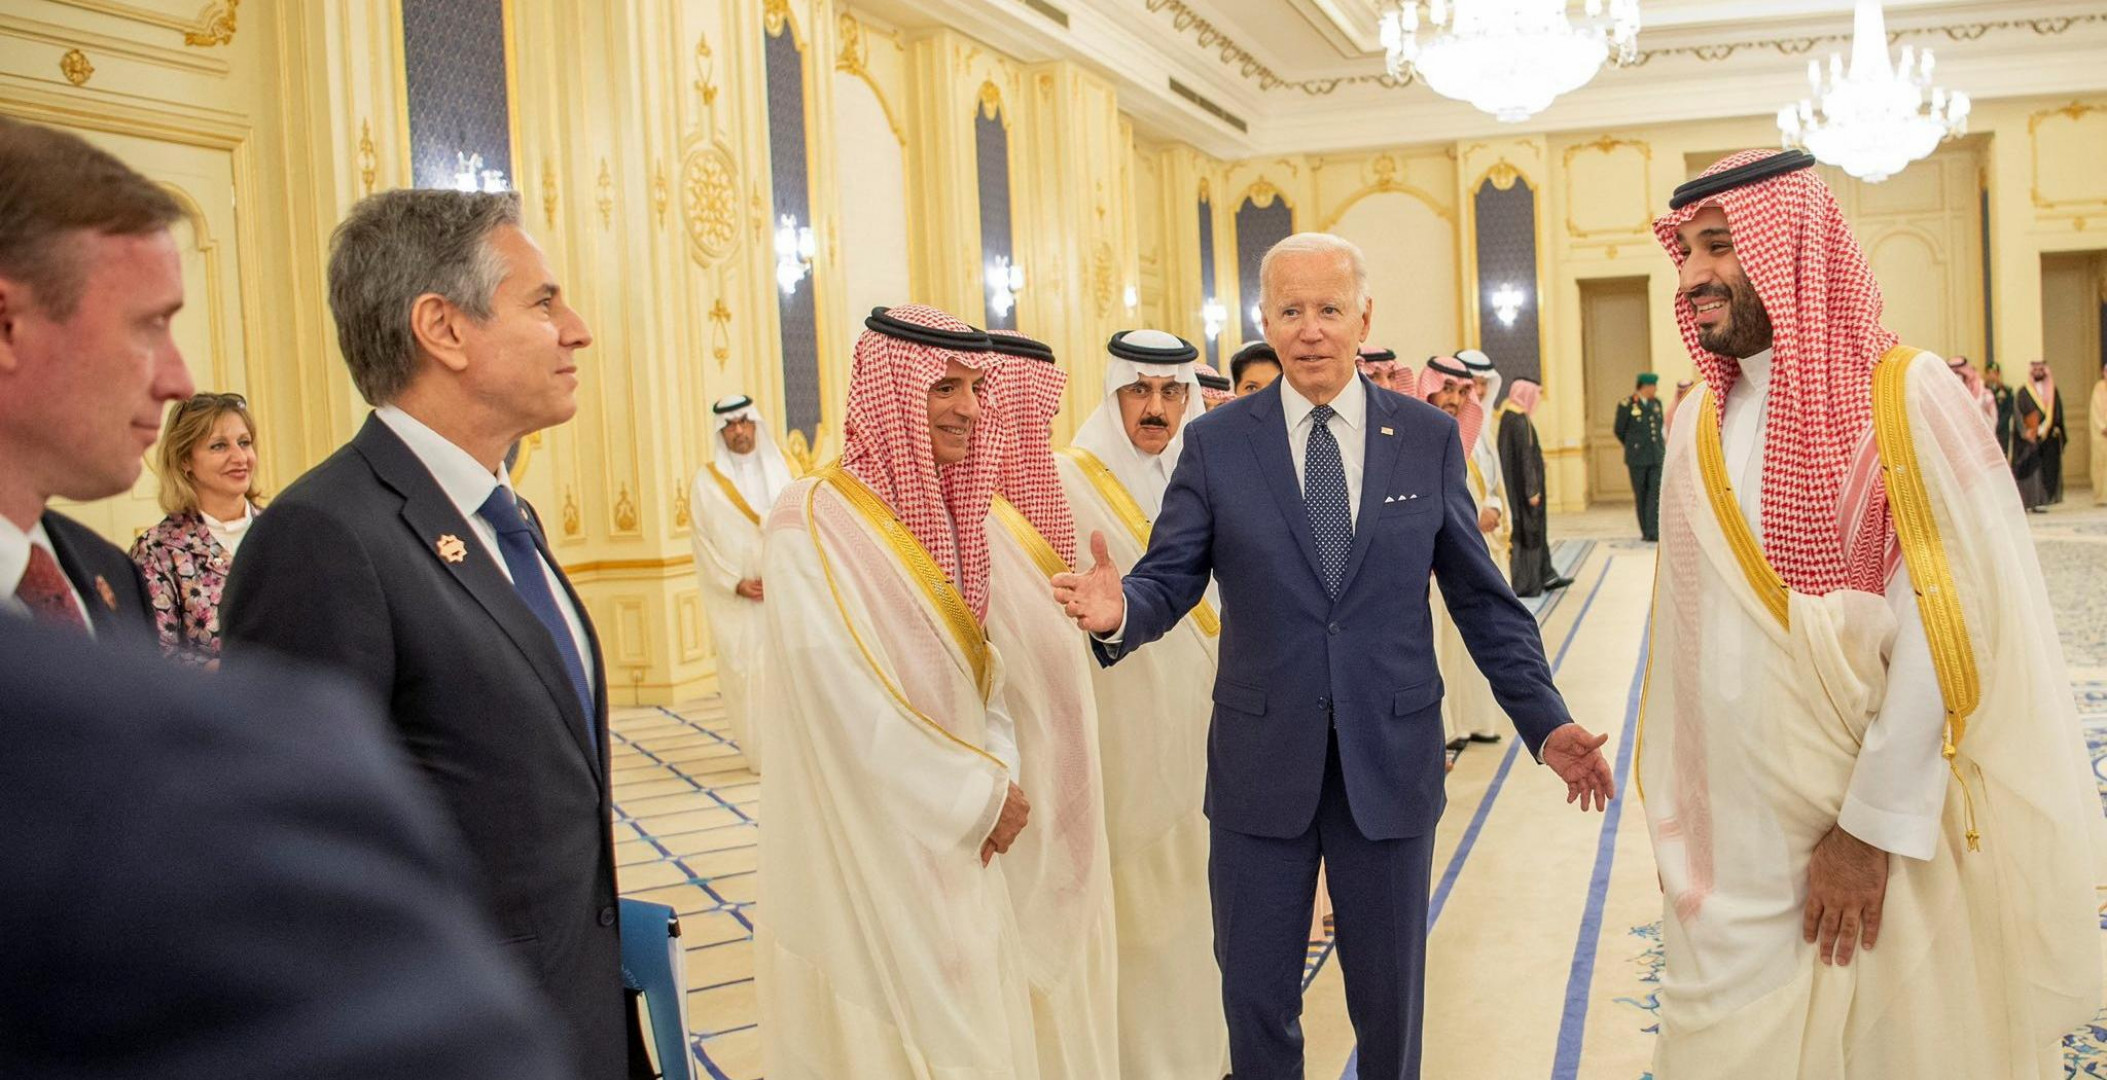 U.S. Senior Adviser Visits Saudi Arabia for Talks on Middle East Stability and Israel Relations, Media